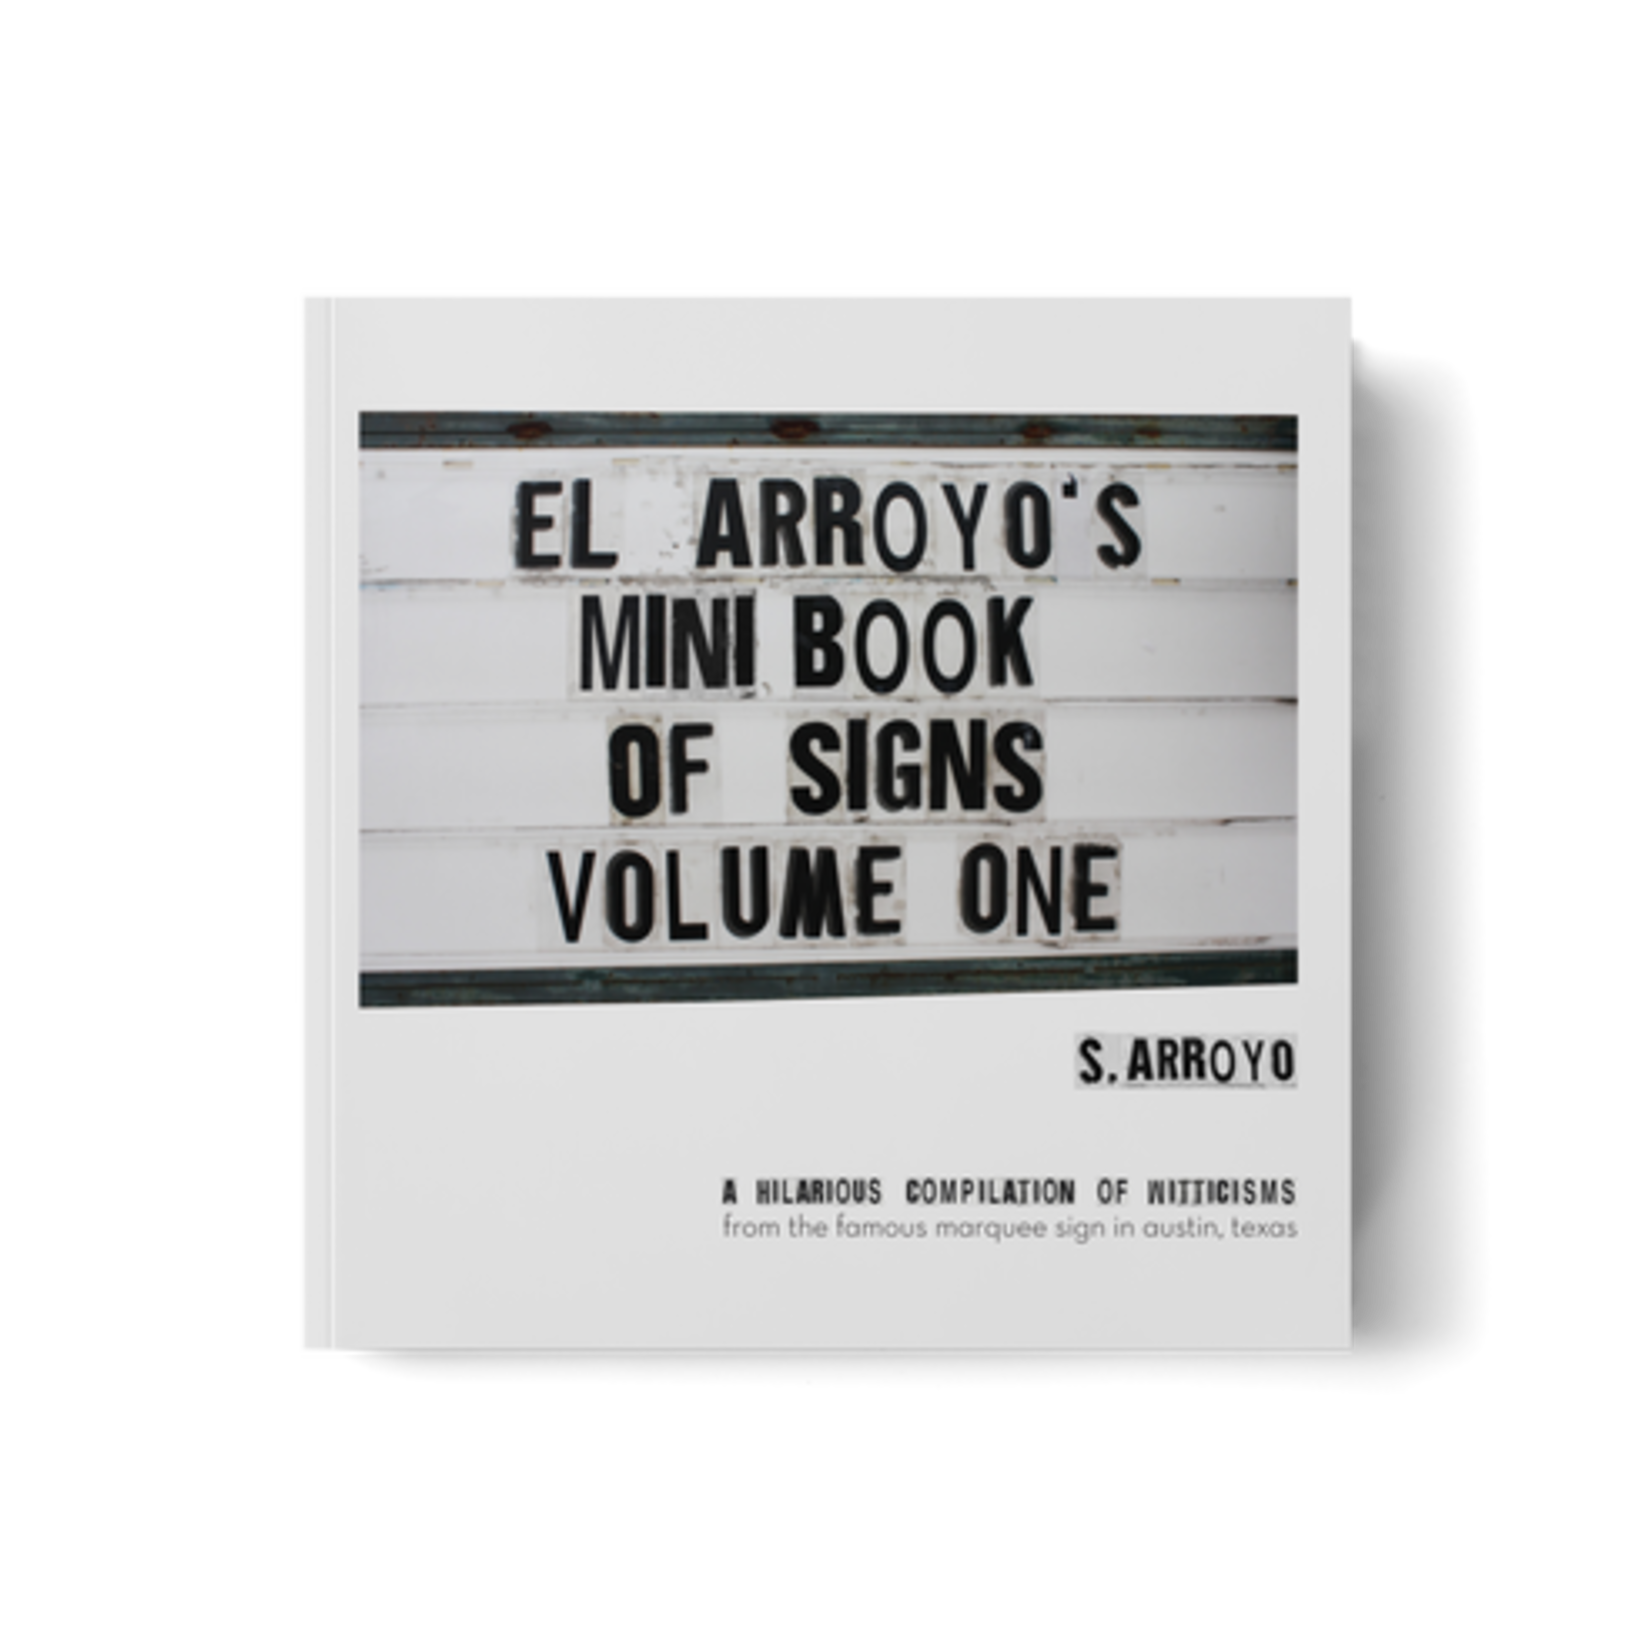 El Arroyo El Arroyo's Mini Book of Signs Vol. 1